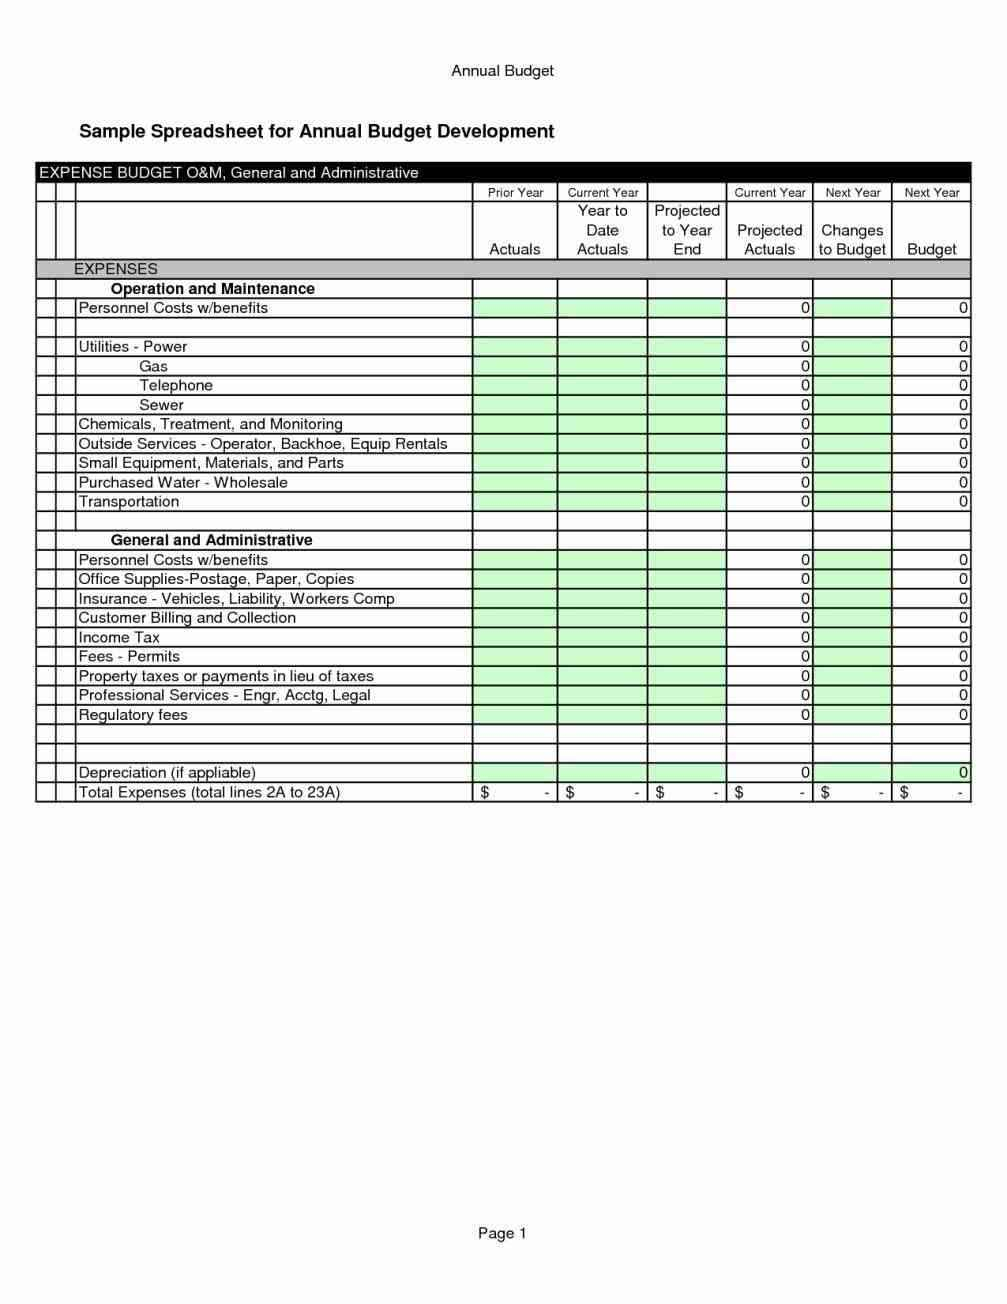 Sample Church Budget Worksheet Spreadsheet Life Fresh Bud Templates throughout Sample Church Budget Spreadsheet